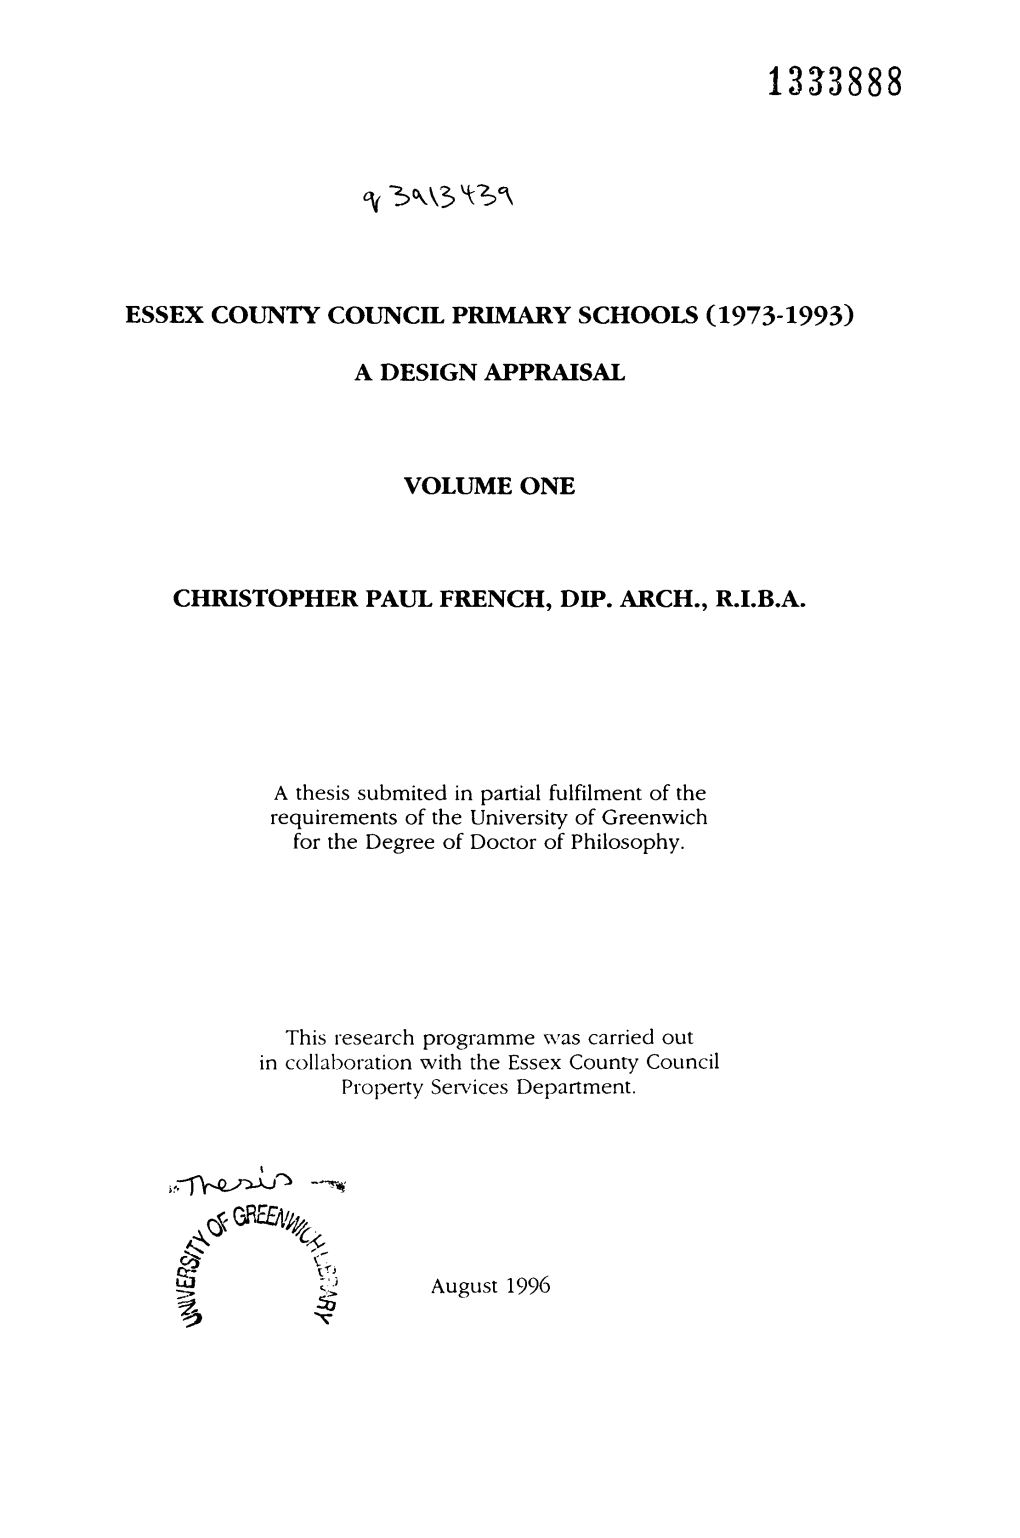 Essex County Council Primary Schools (1973-1993)